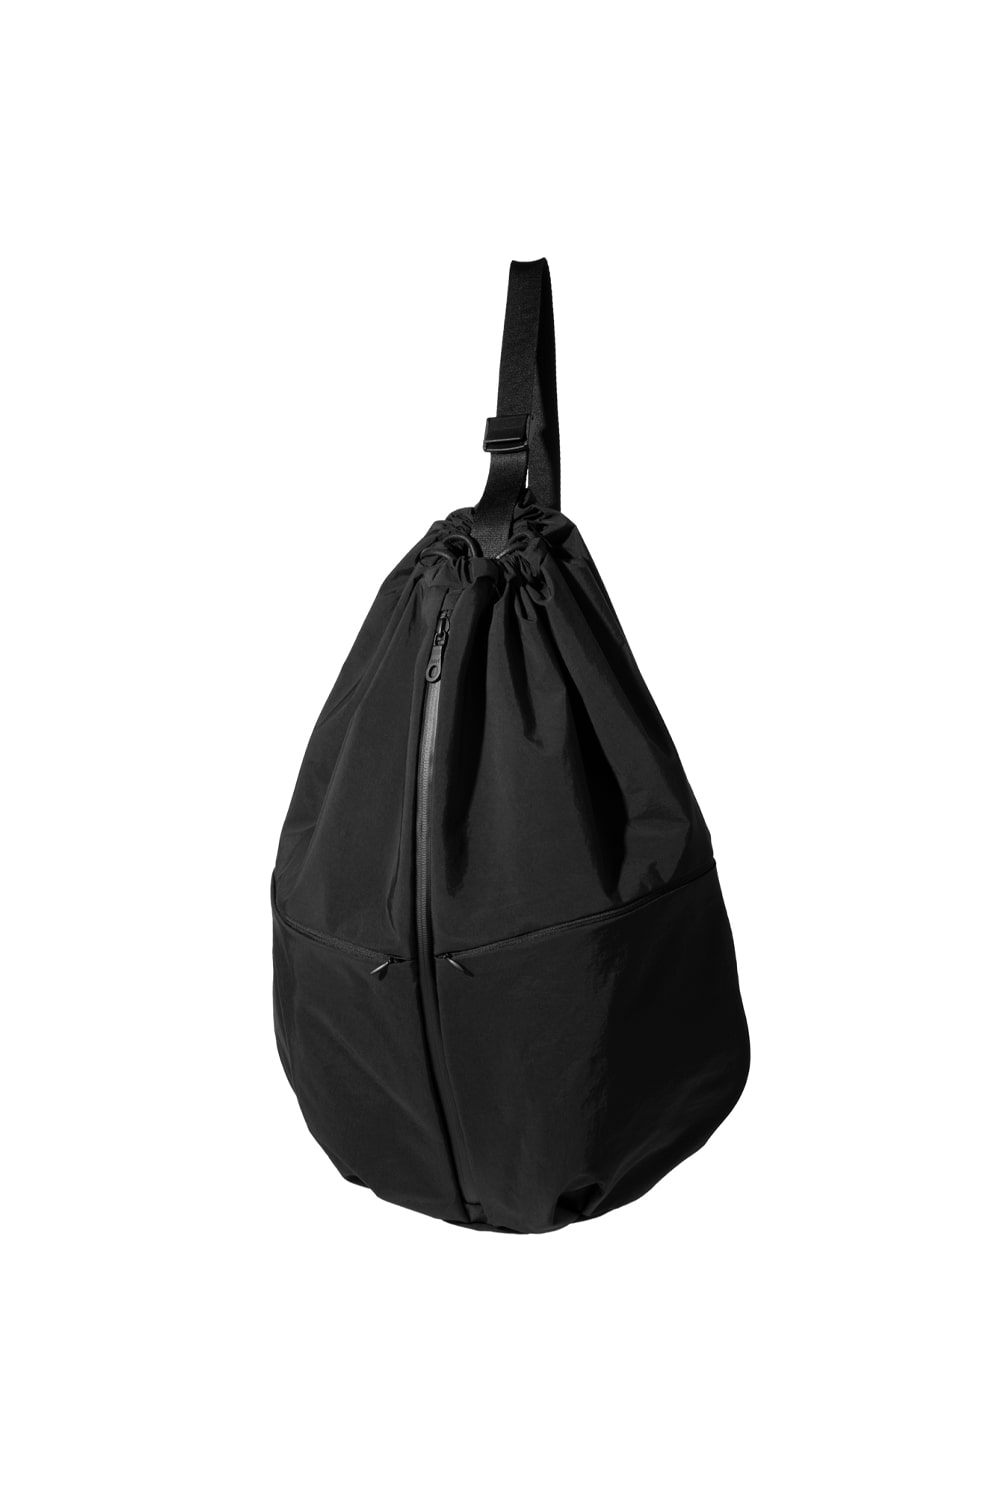 bundle bag (black)